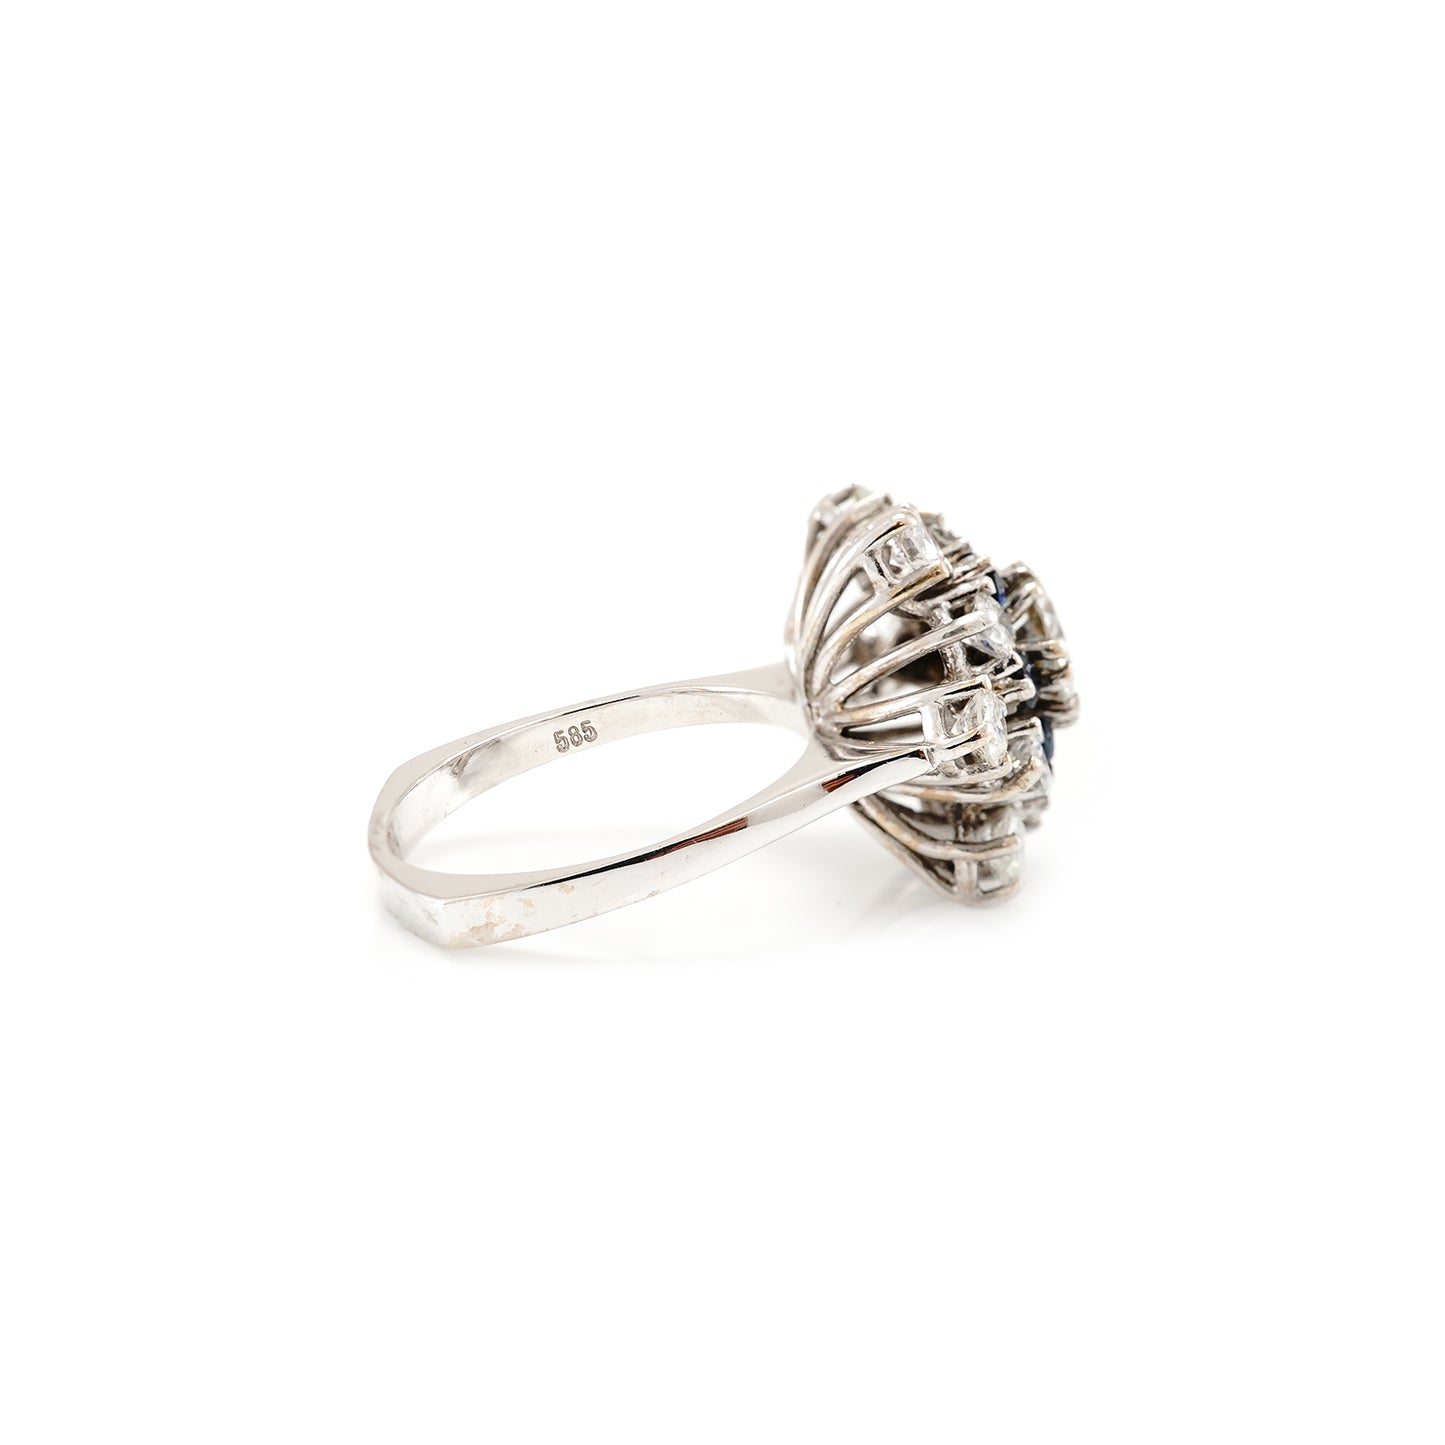 Vintage diamond ring sapphire white gold ring 14K gemstone ring blue white engagement ring